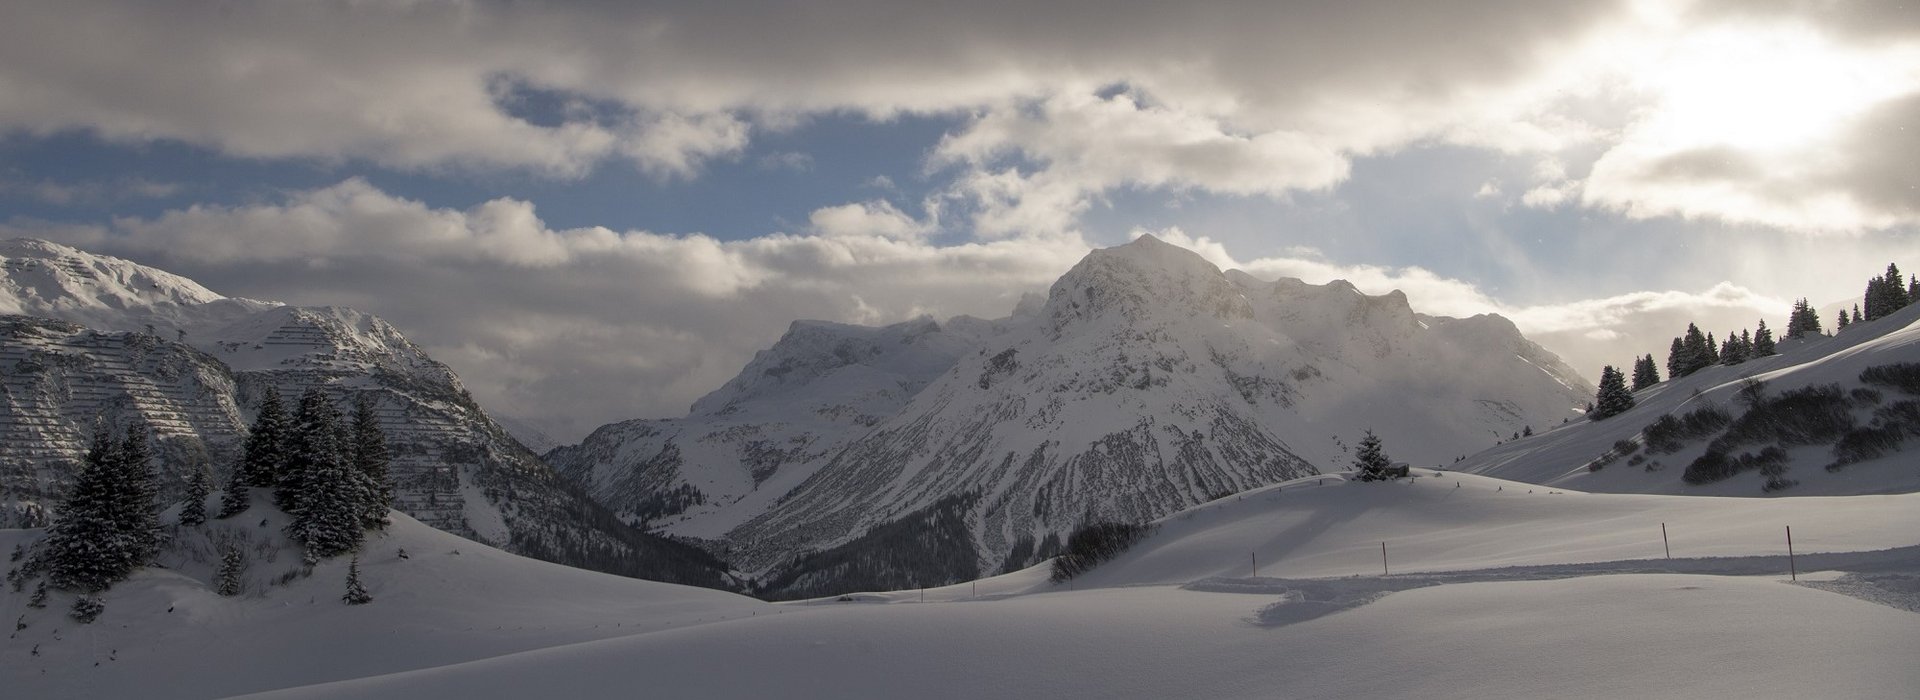 Verschneites Bergpanorama in Lech am Arlberg